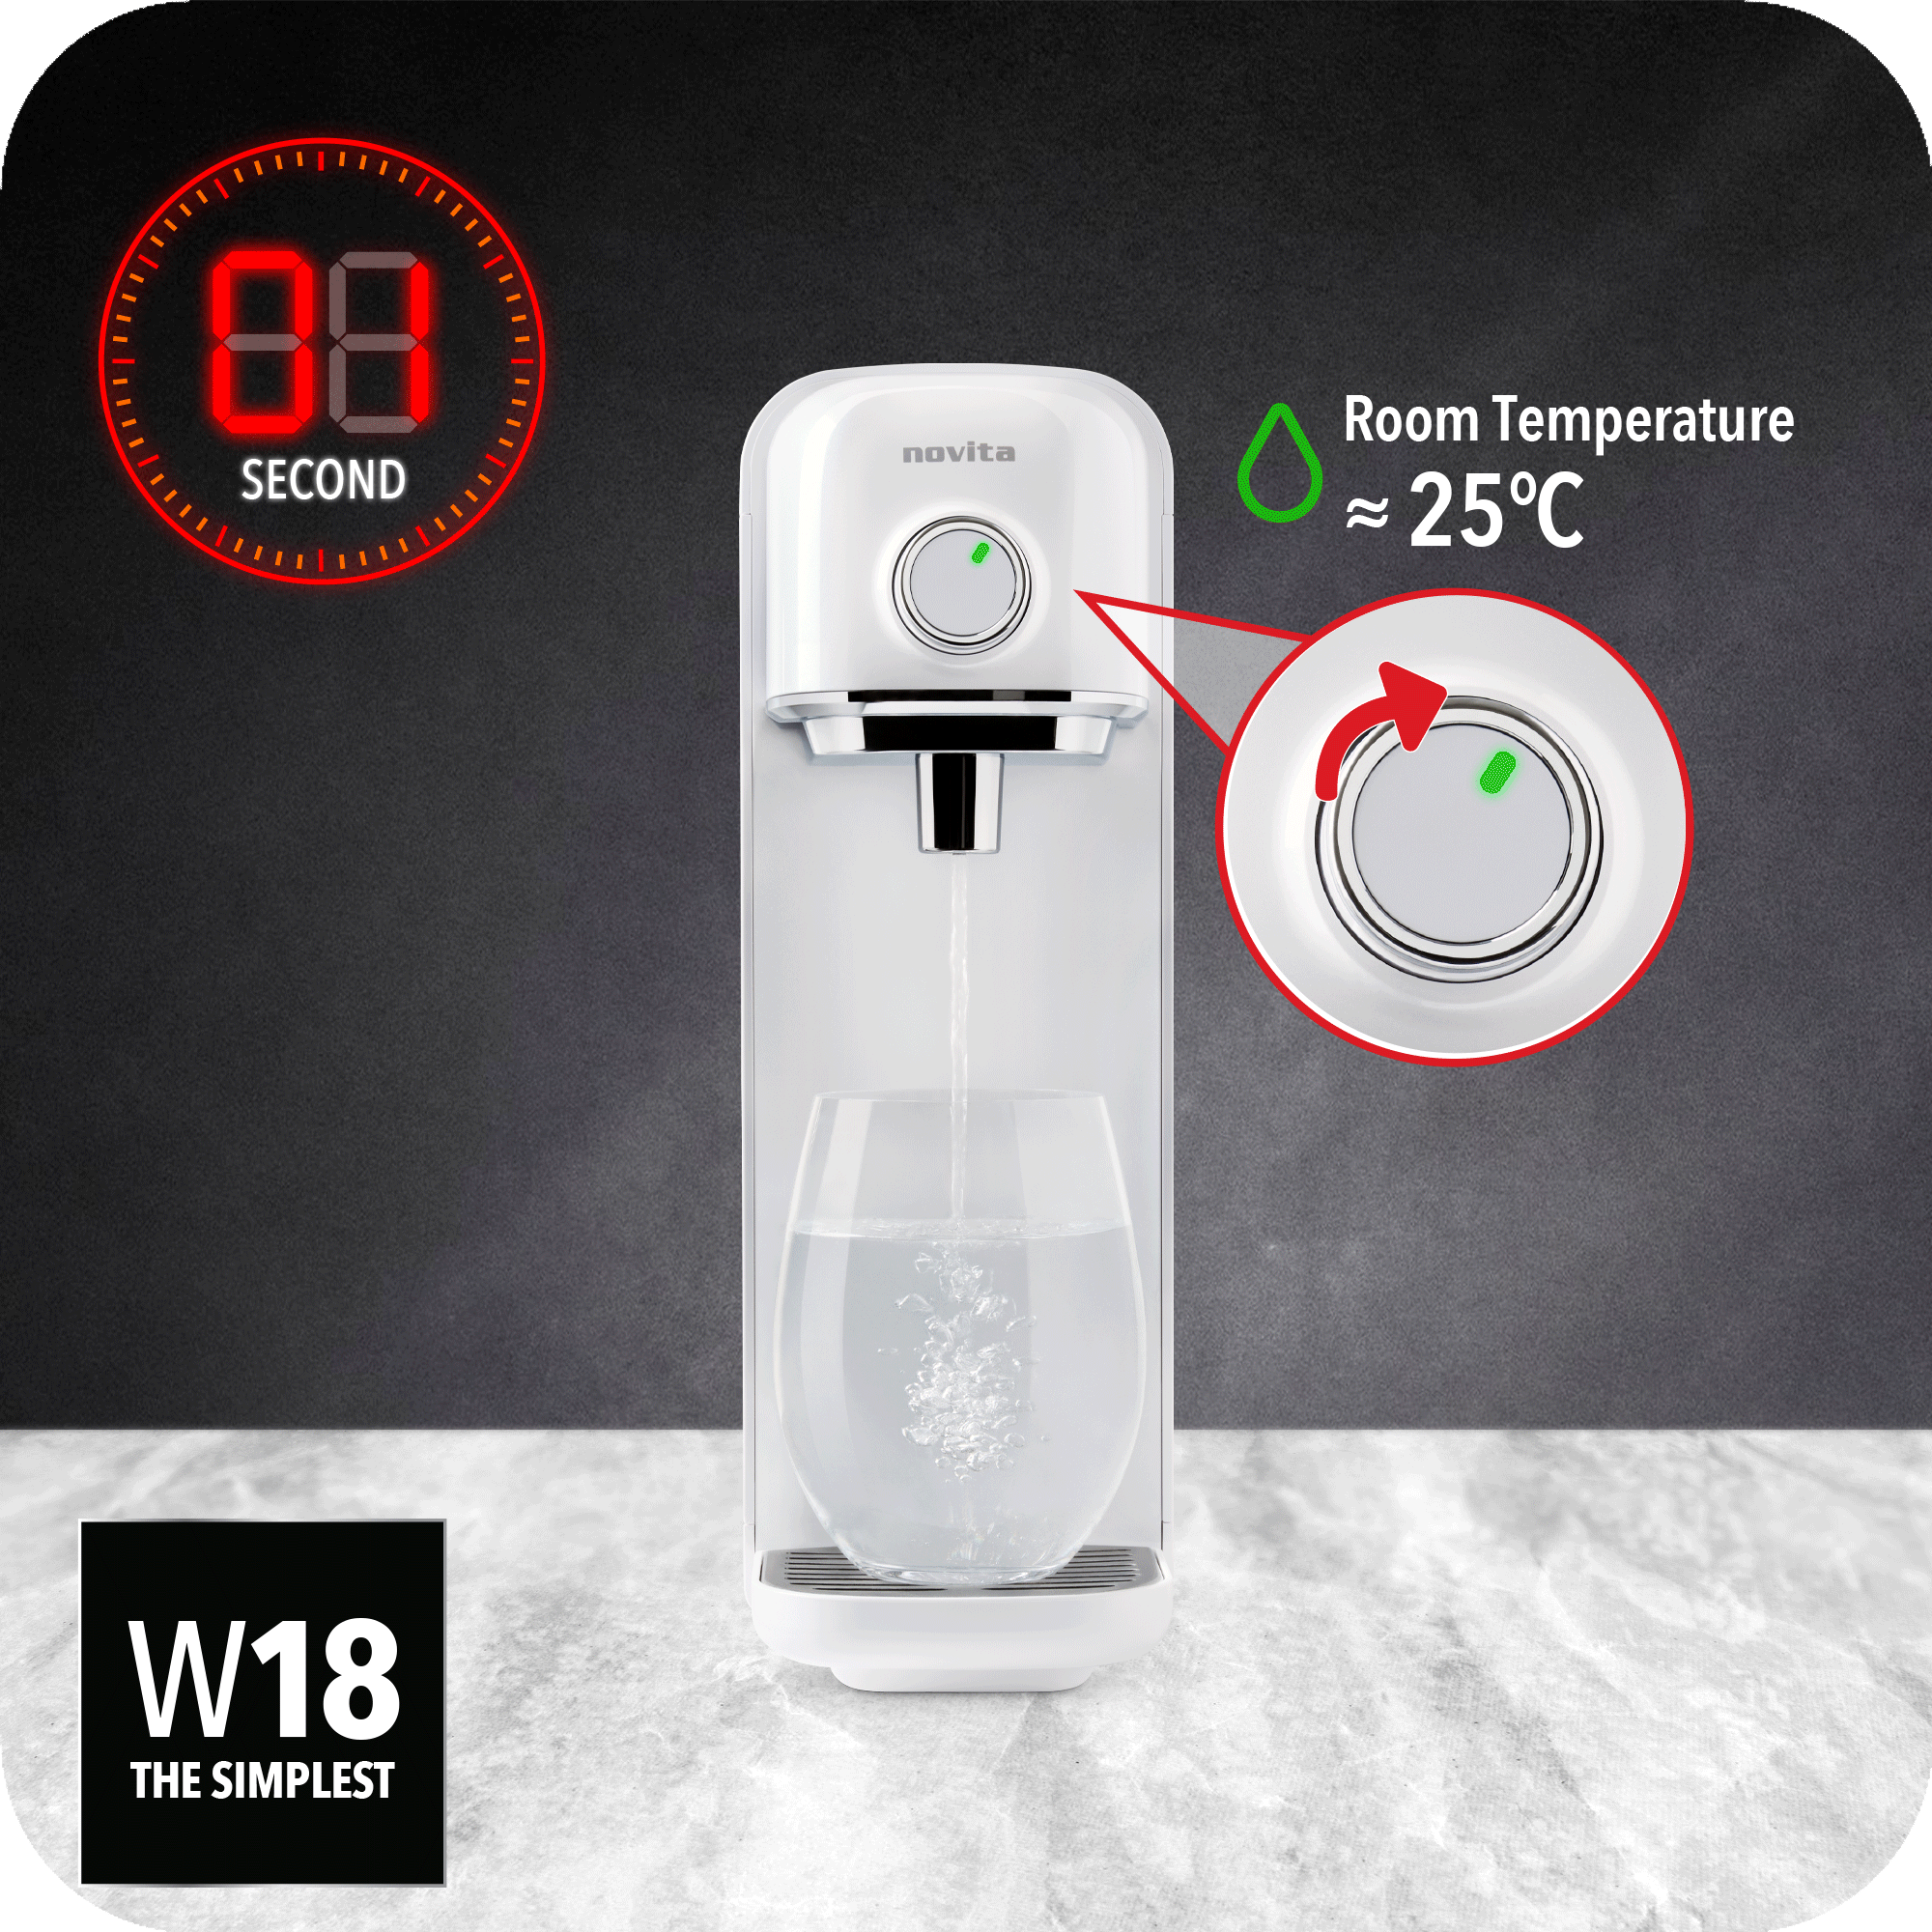 novita SG Instant Hot Water Dispenser W18 - The Simplest.